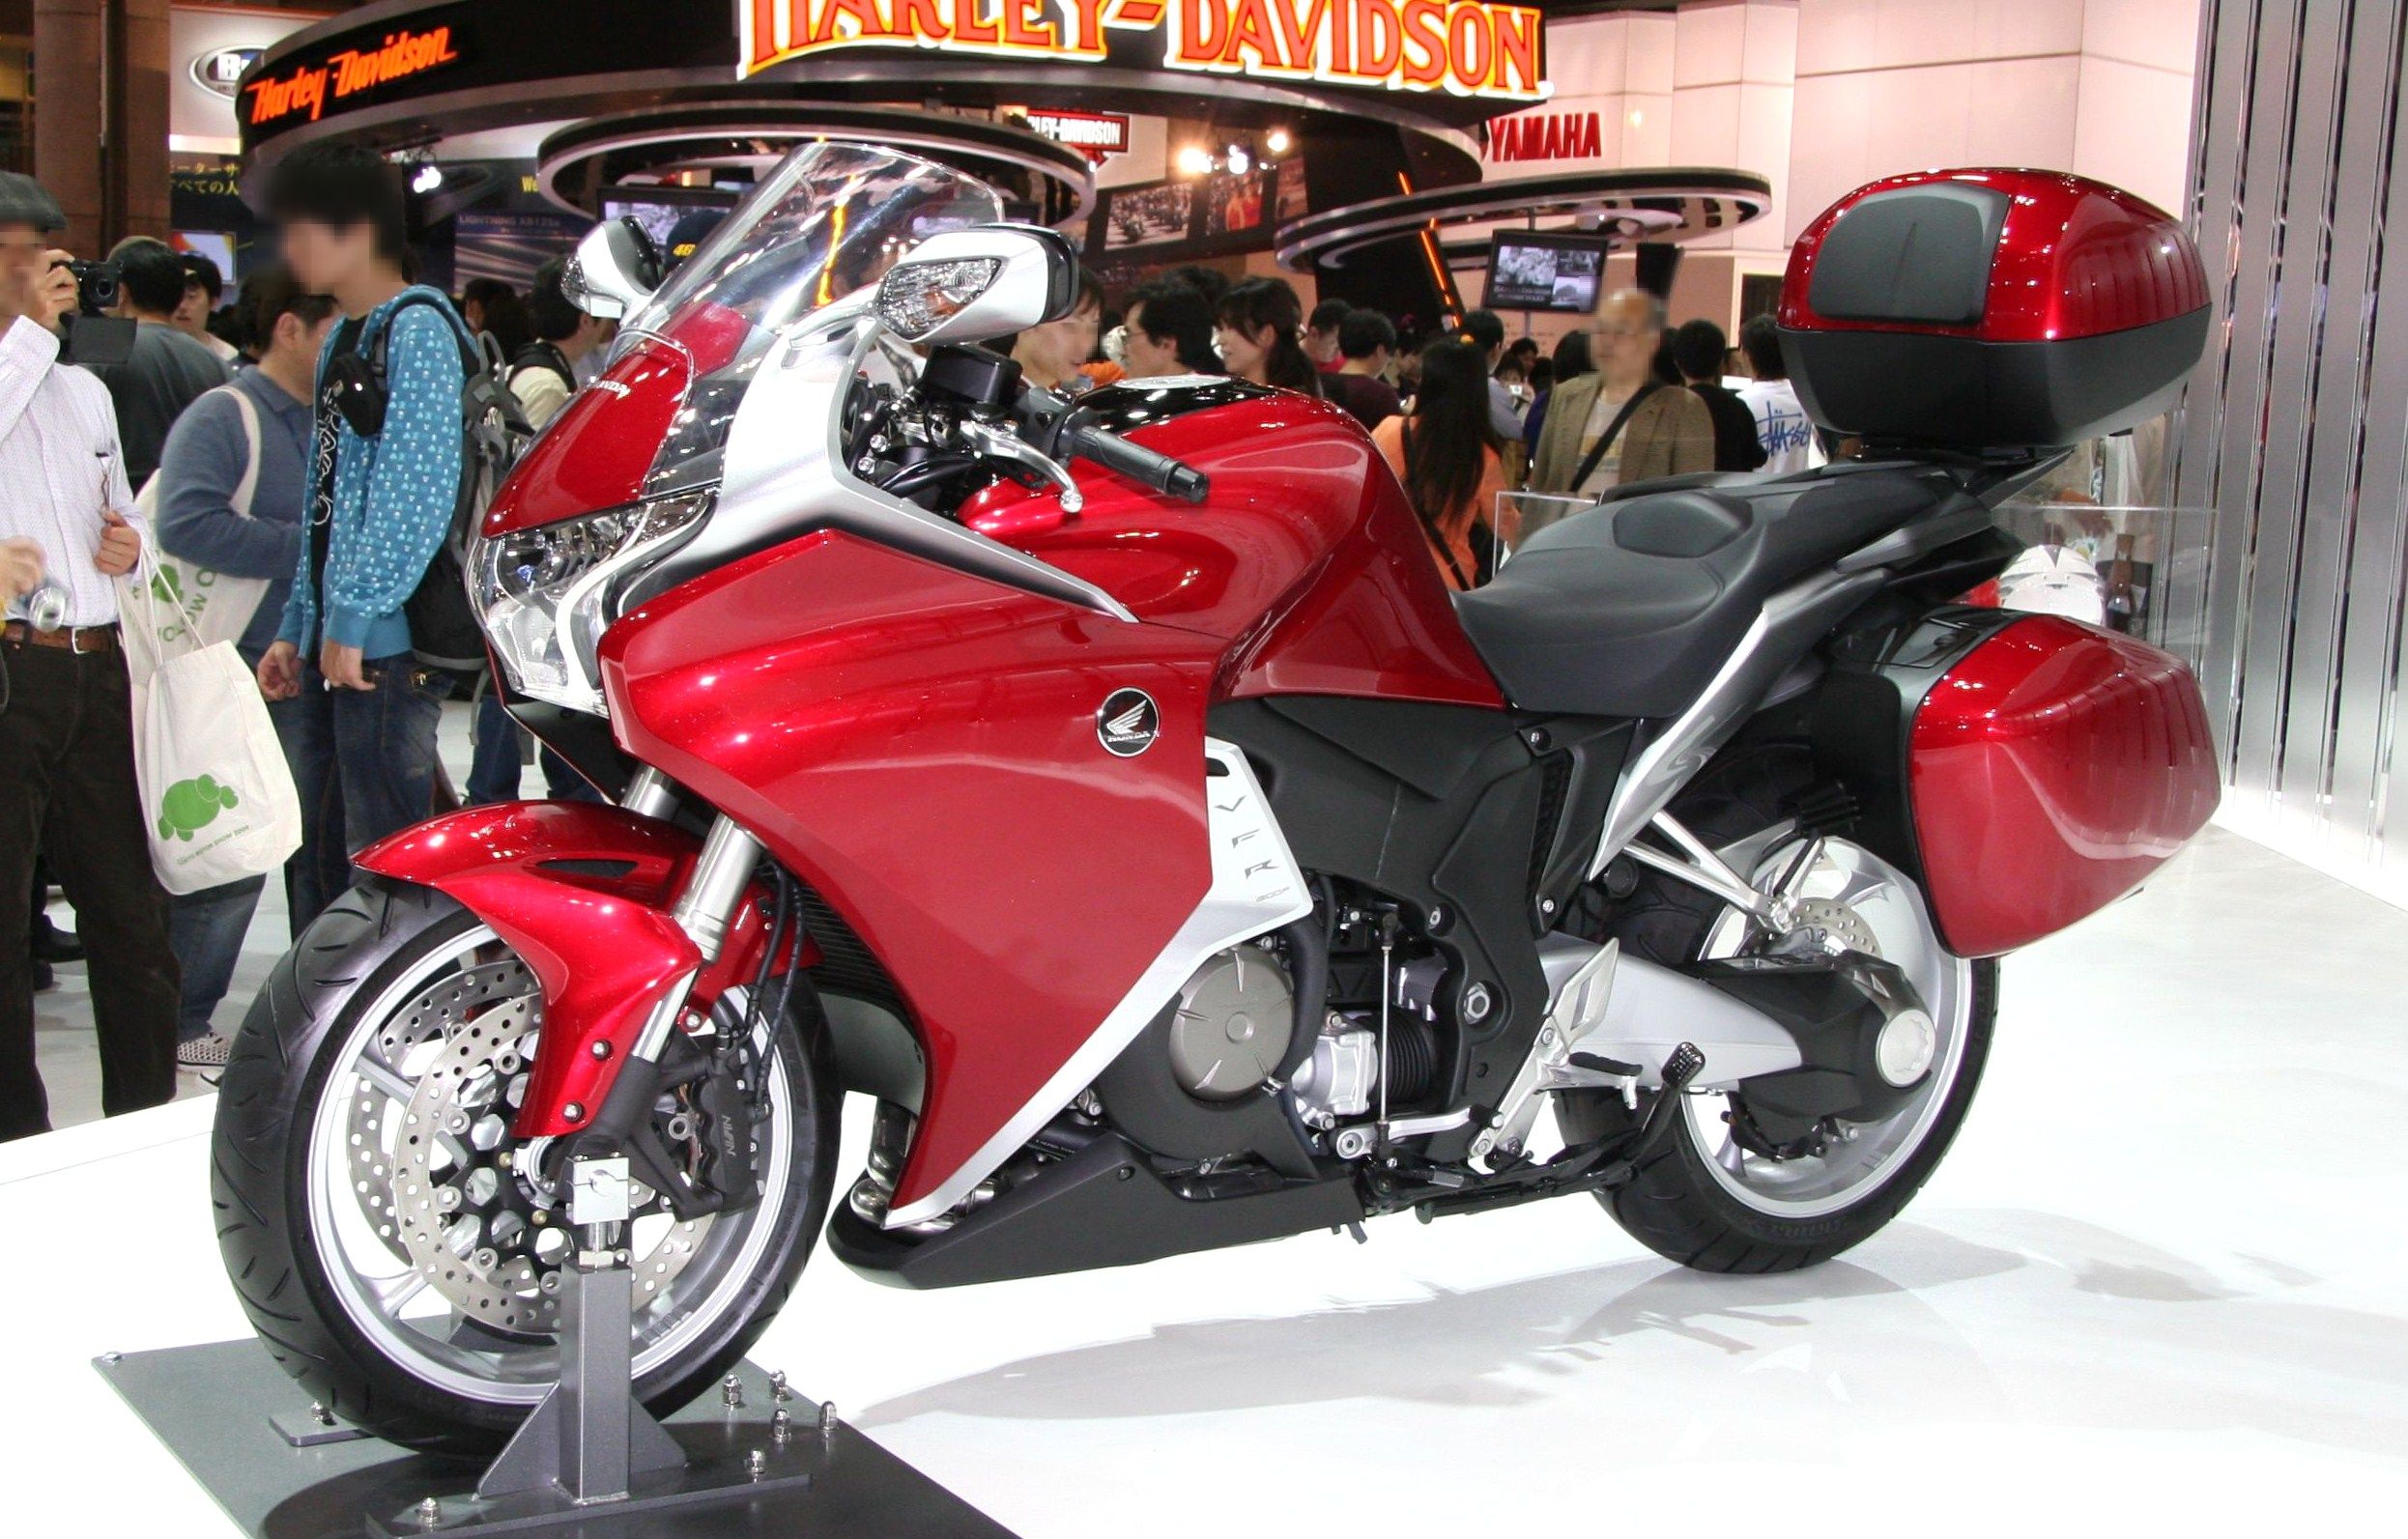 Мотоцикл honda vfr1200 f 2012